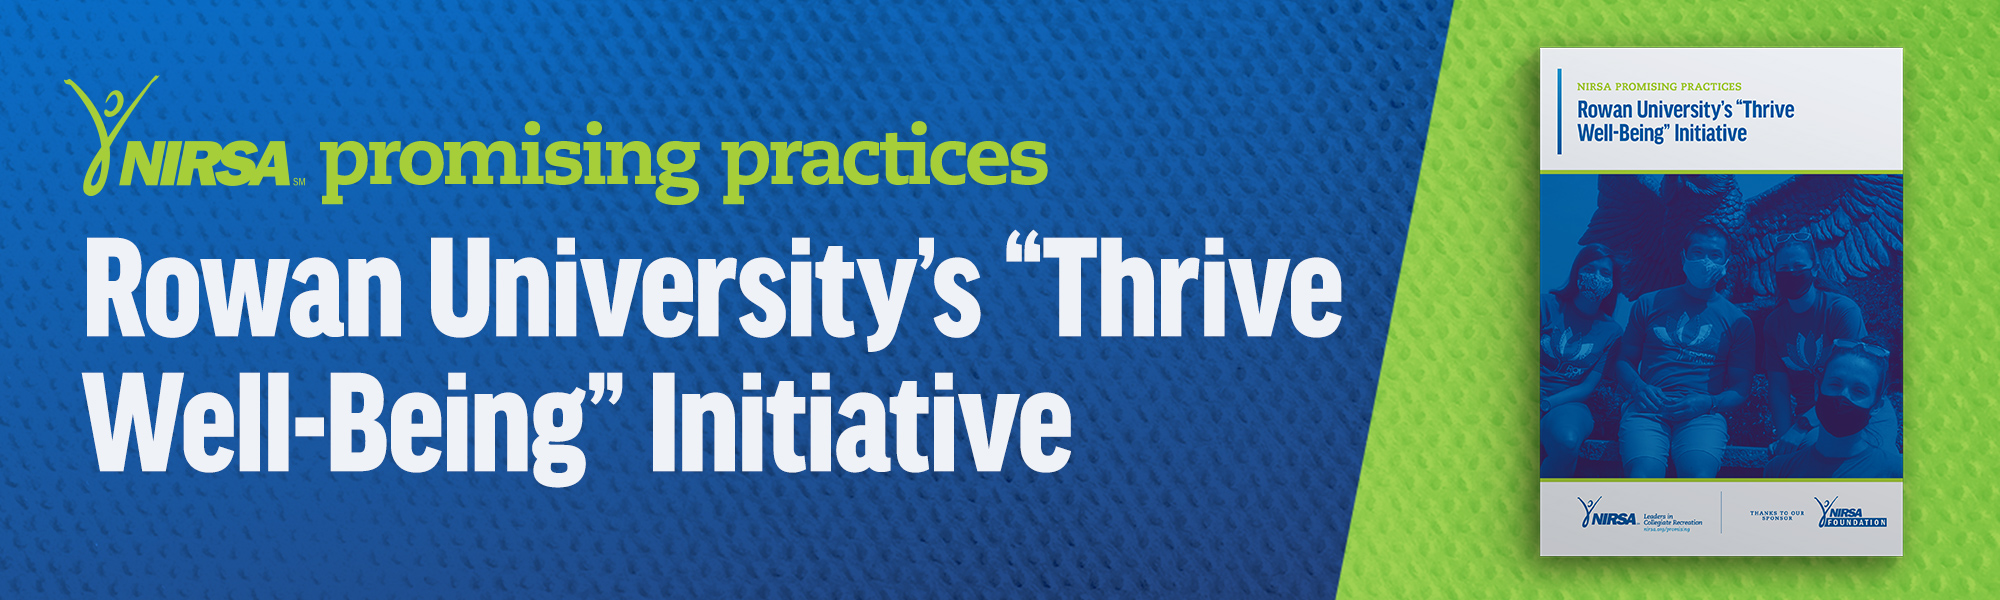 NIRSA Promising Practices: Rowan University’s “Rowan Thrive Well-Being initiative” PDF